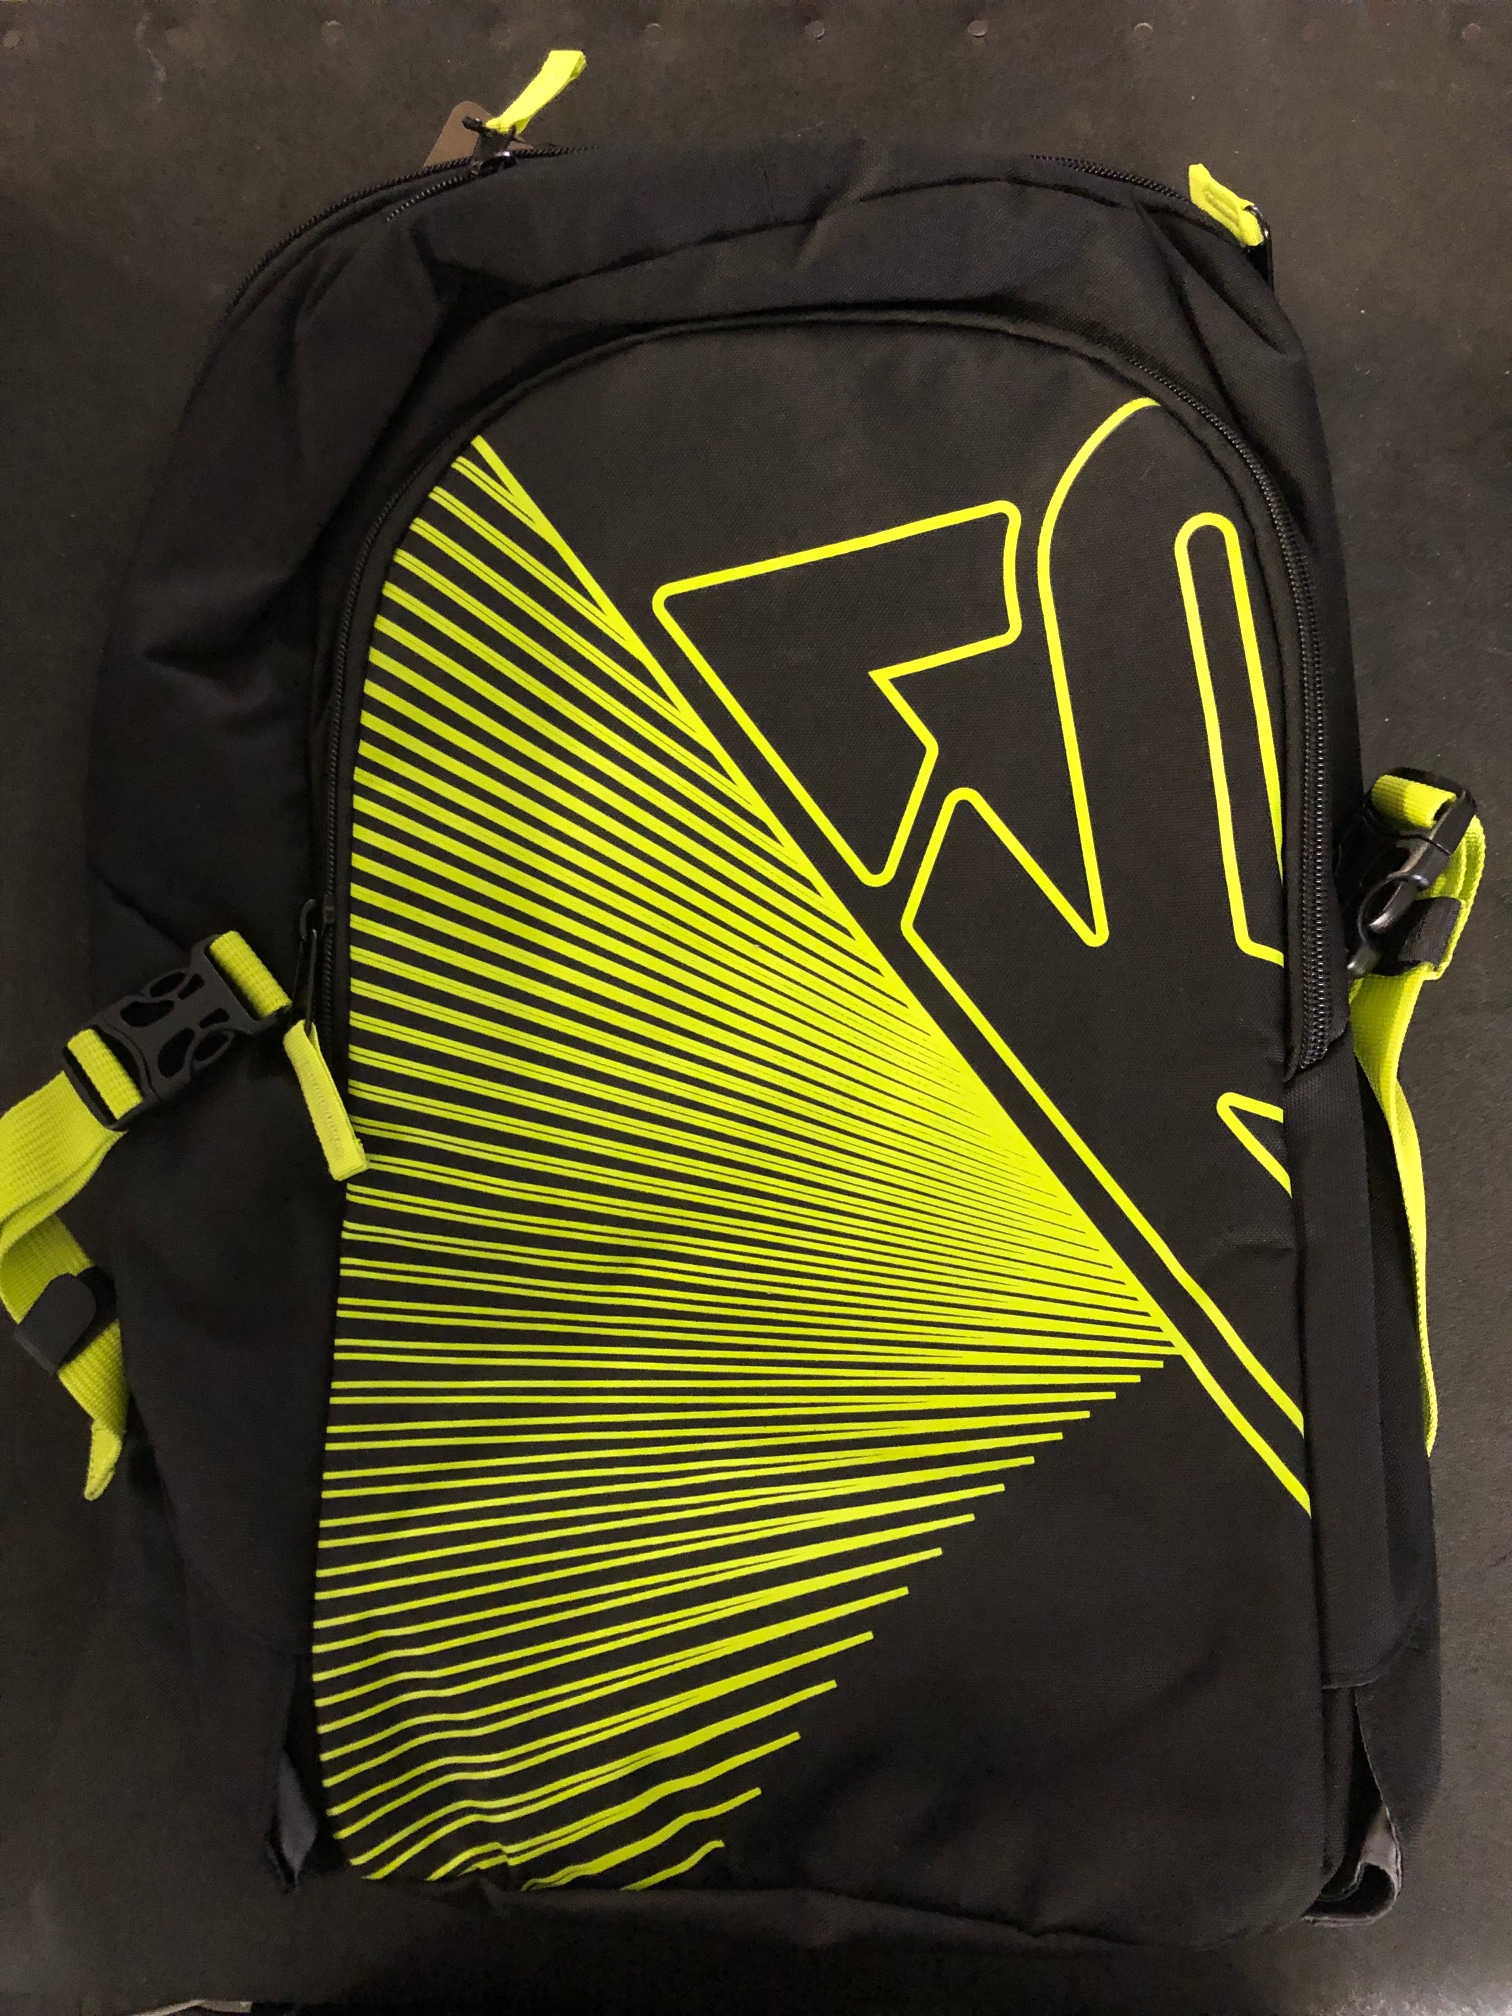 New Large K2 Backpack